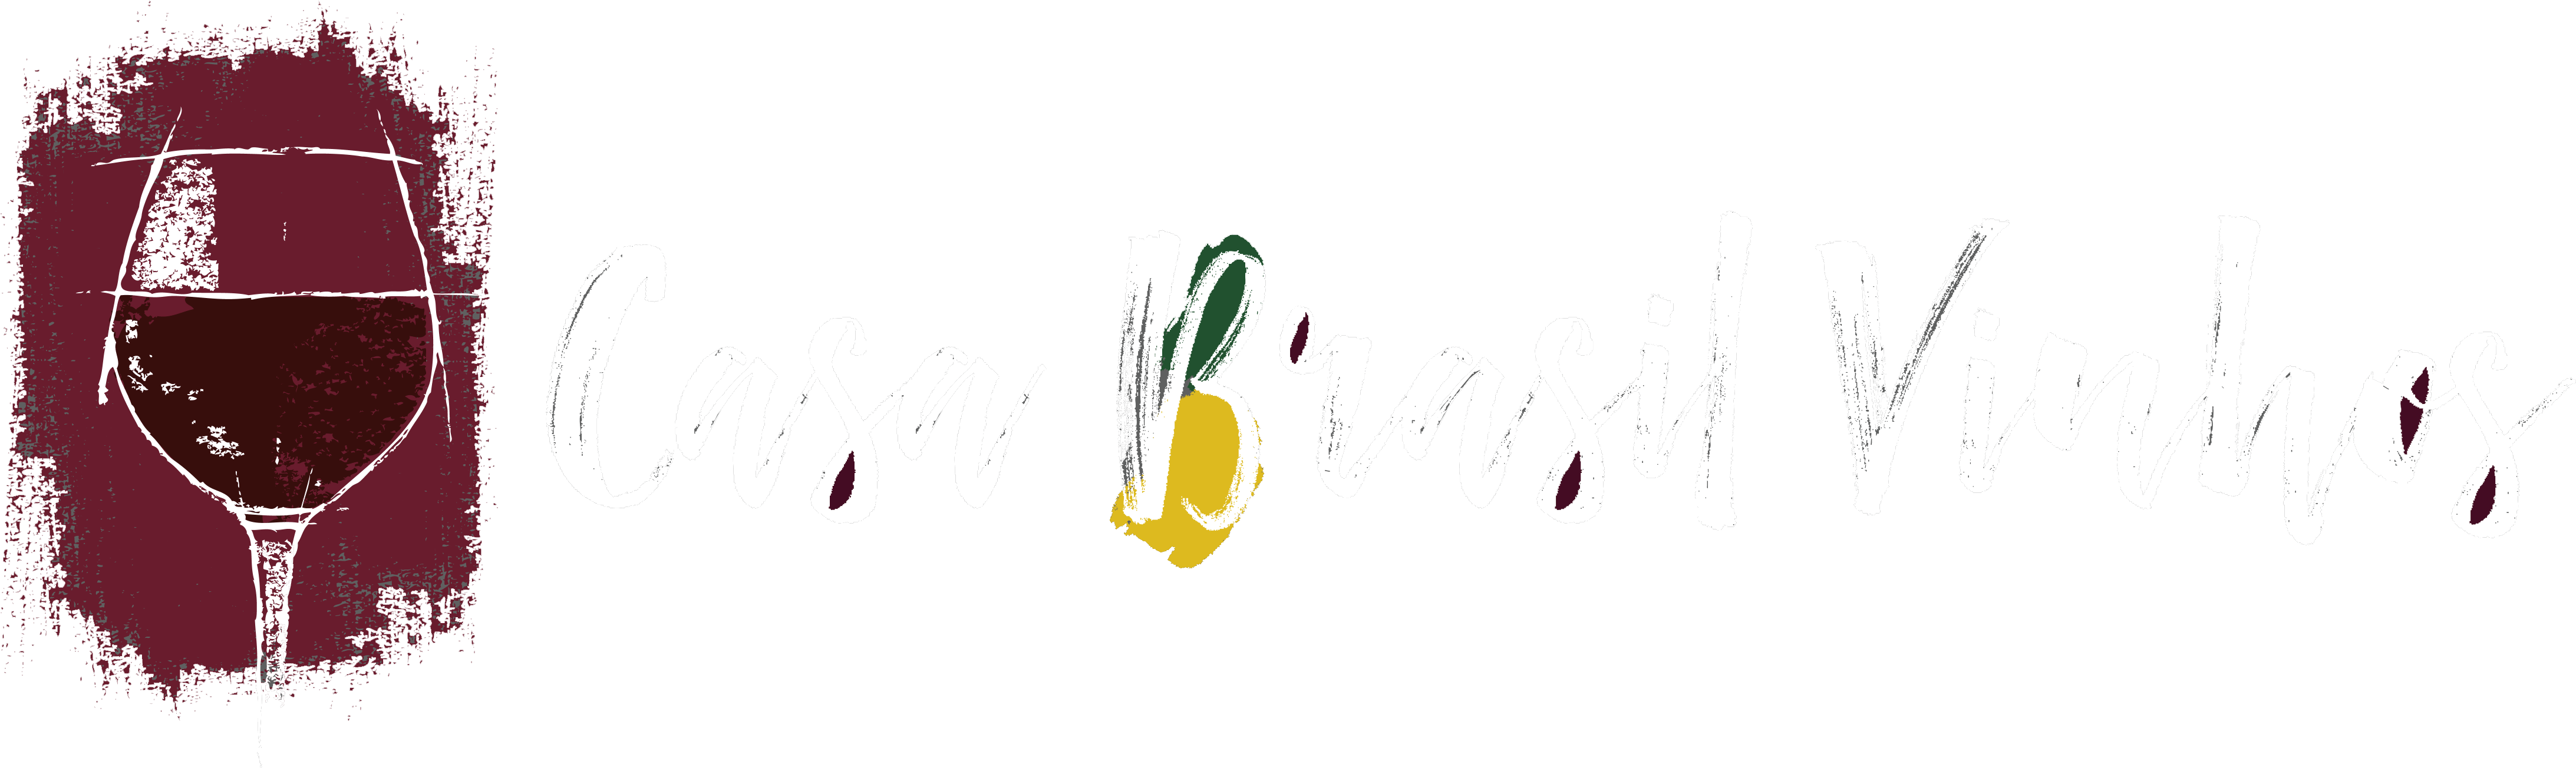 Logotipo Casa Brasil